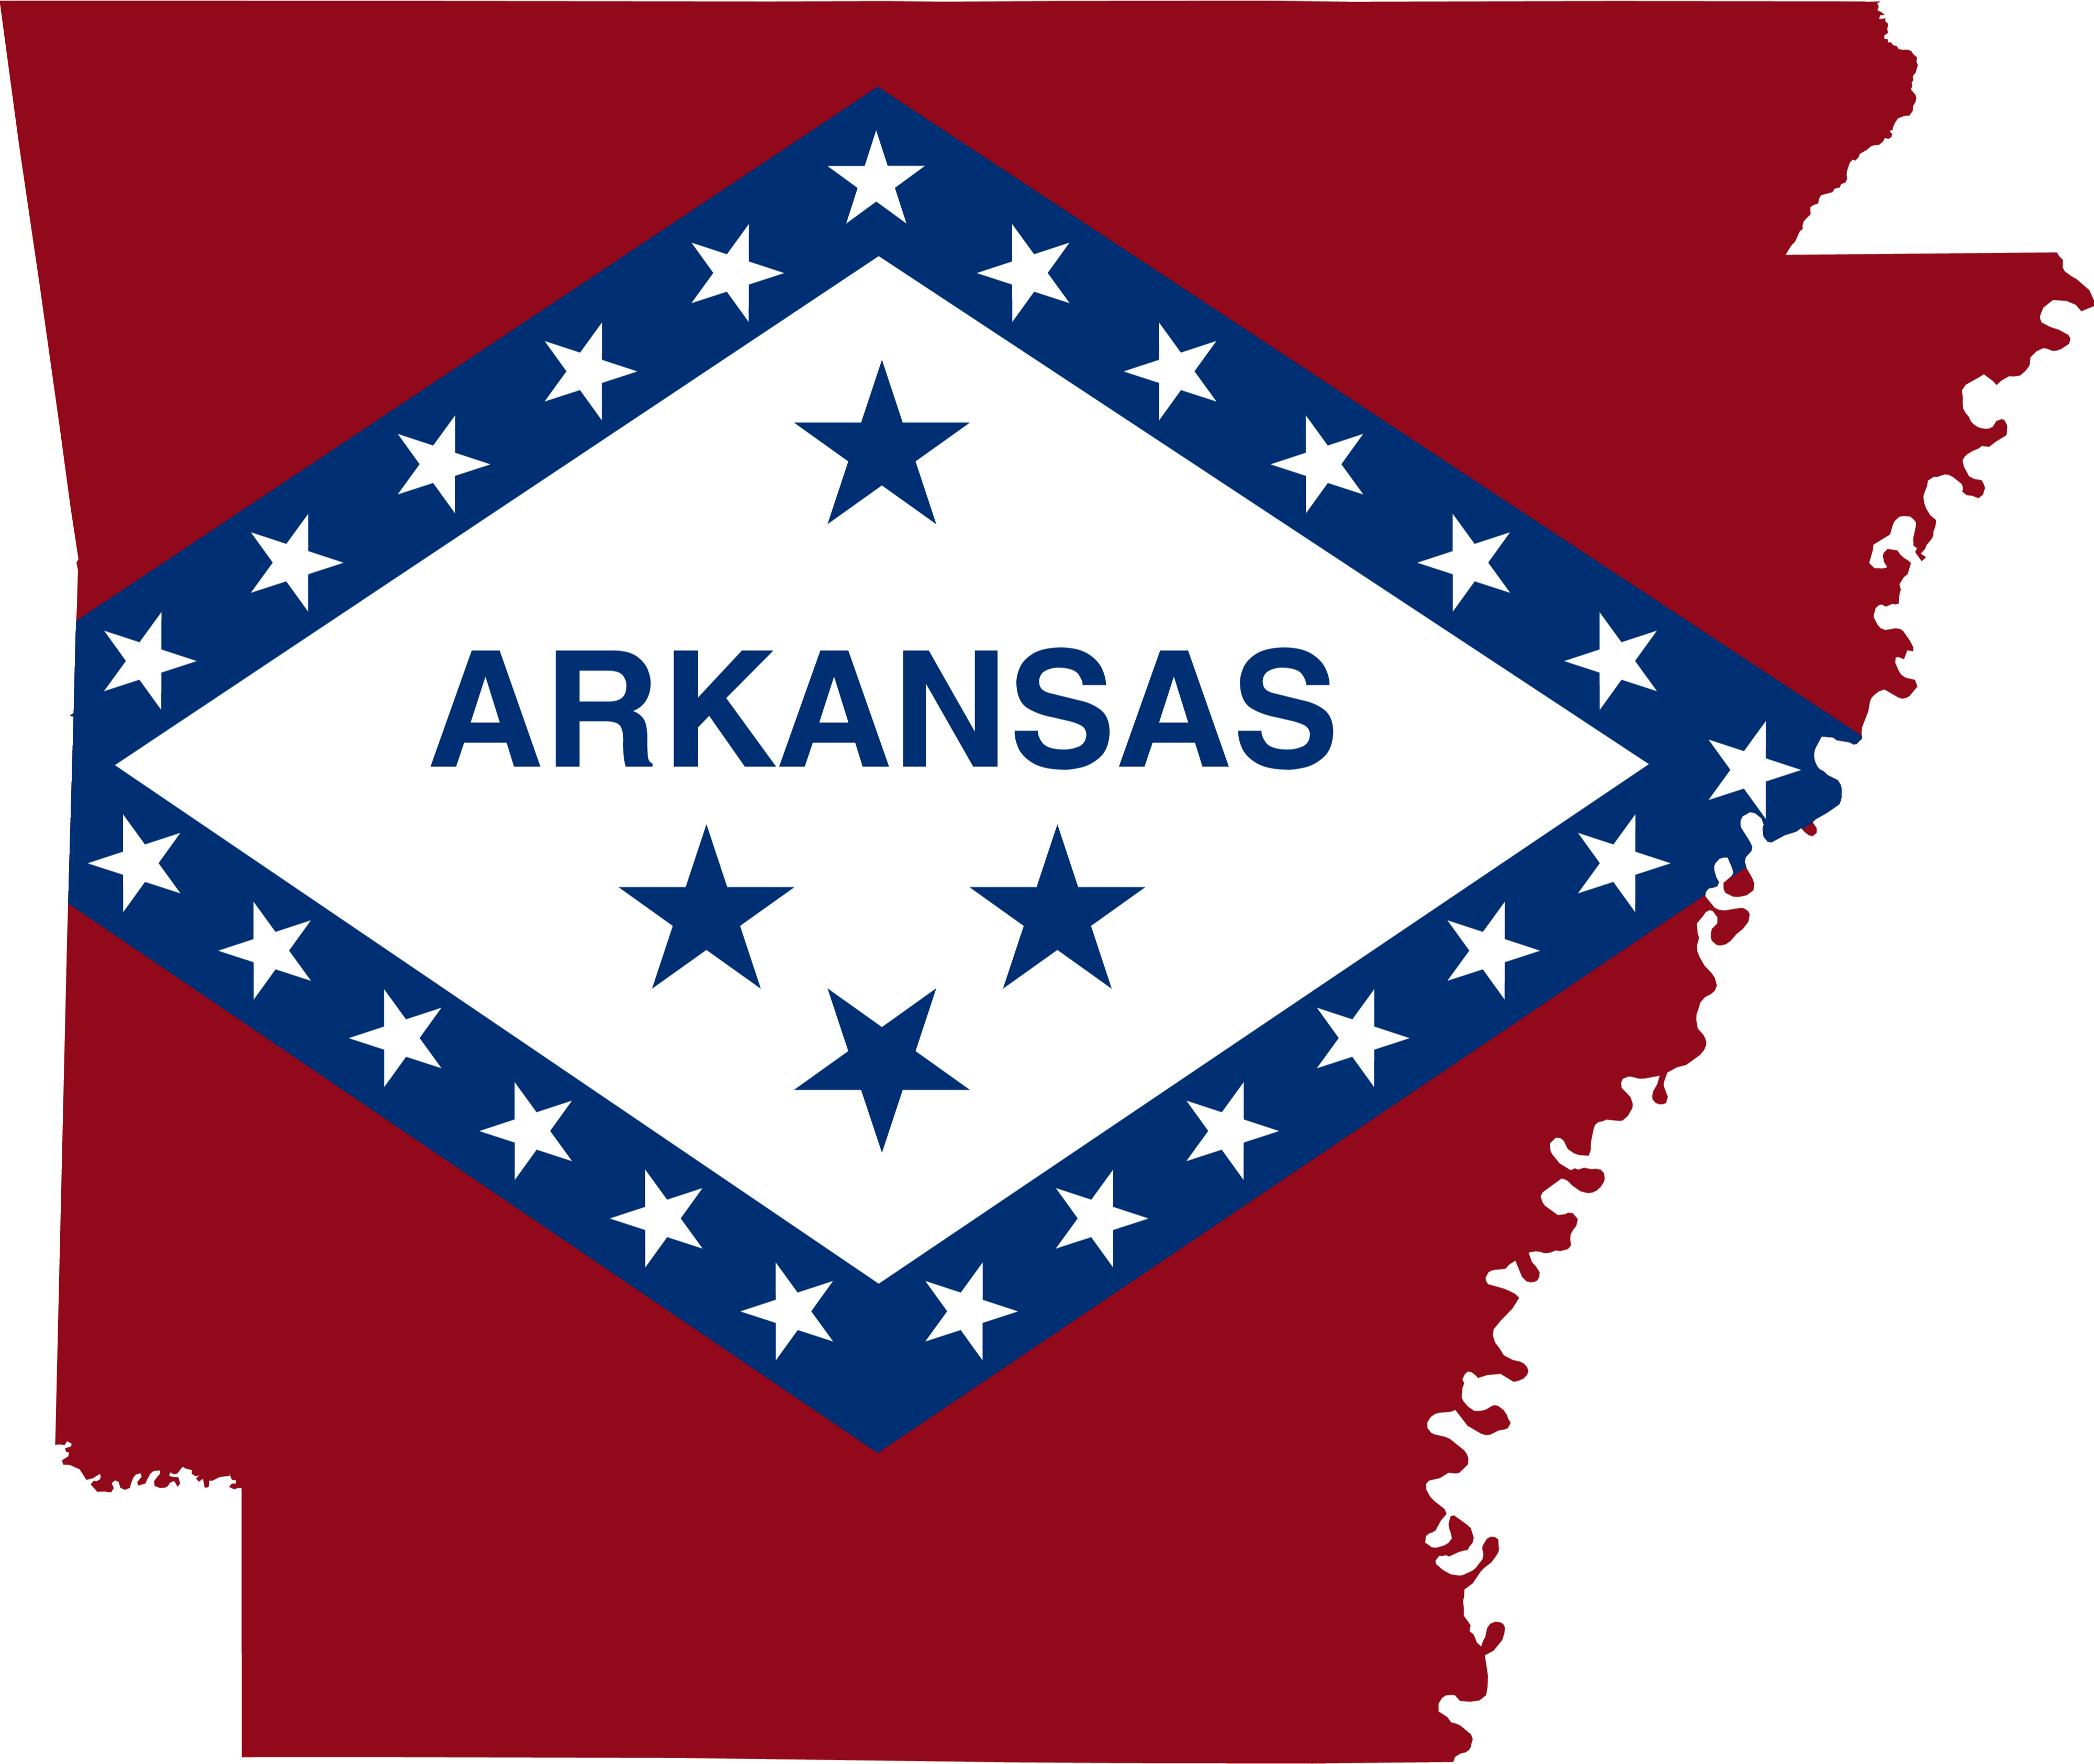 Arkansas Architect Continuing Education Requirements